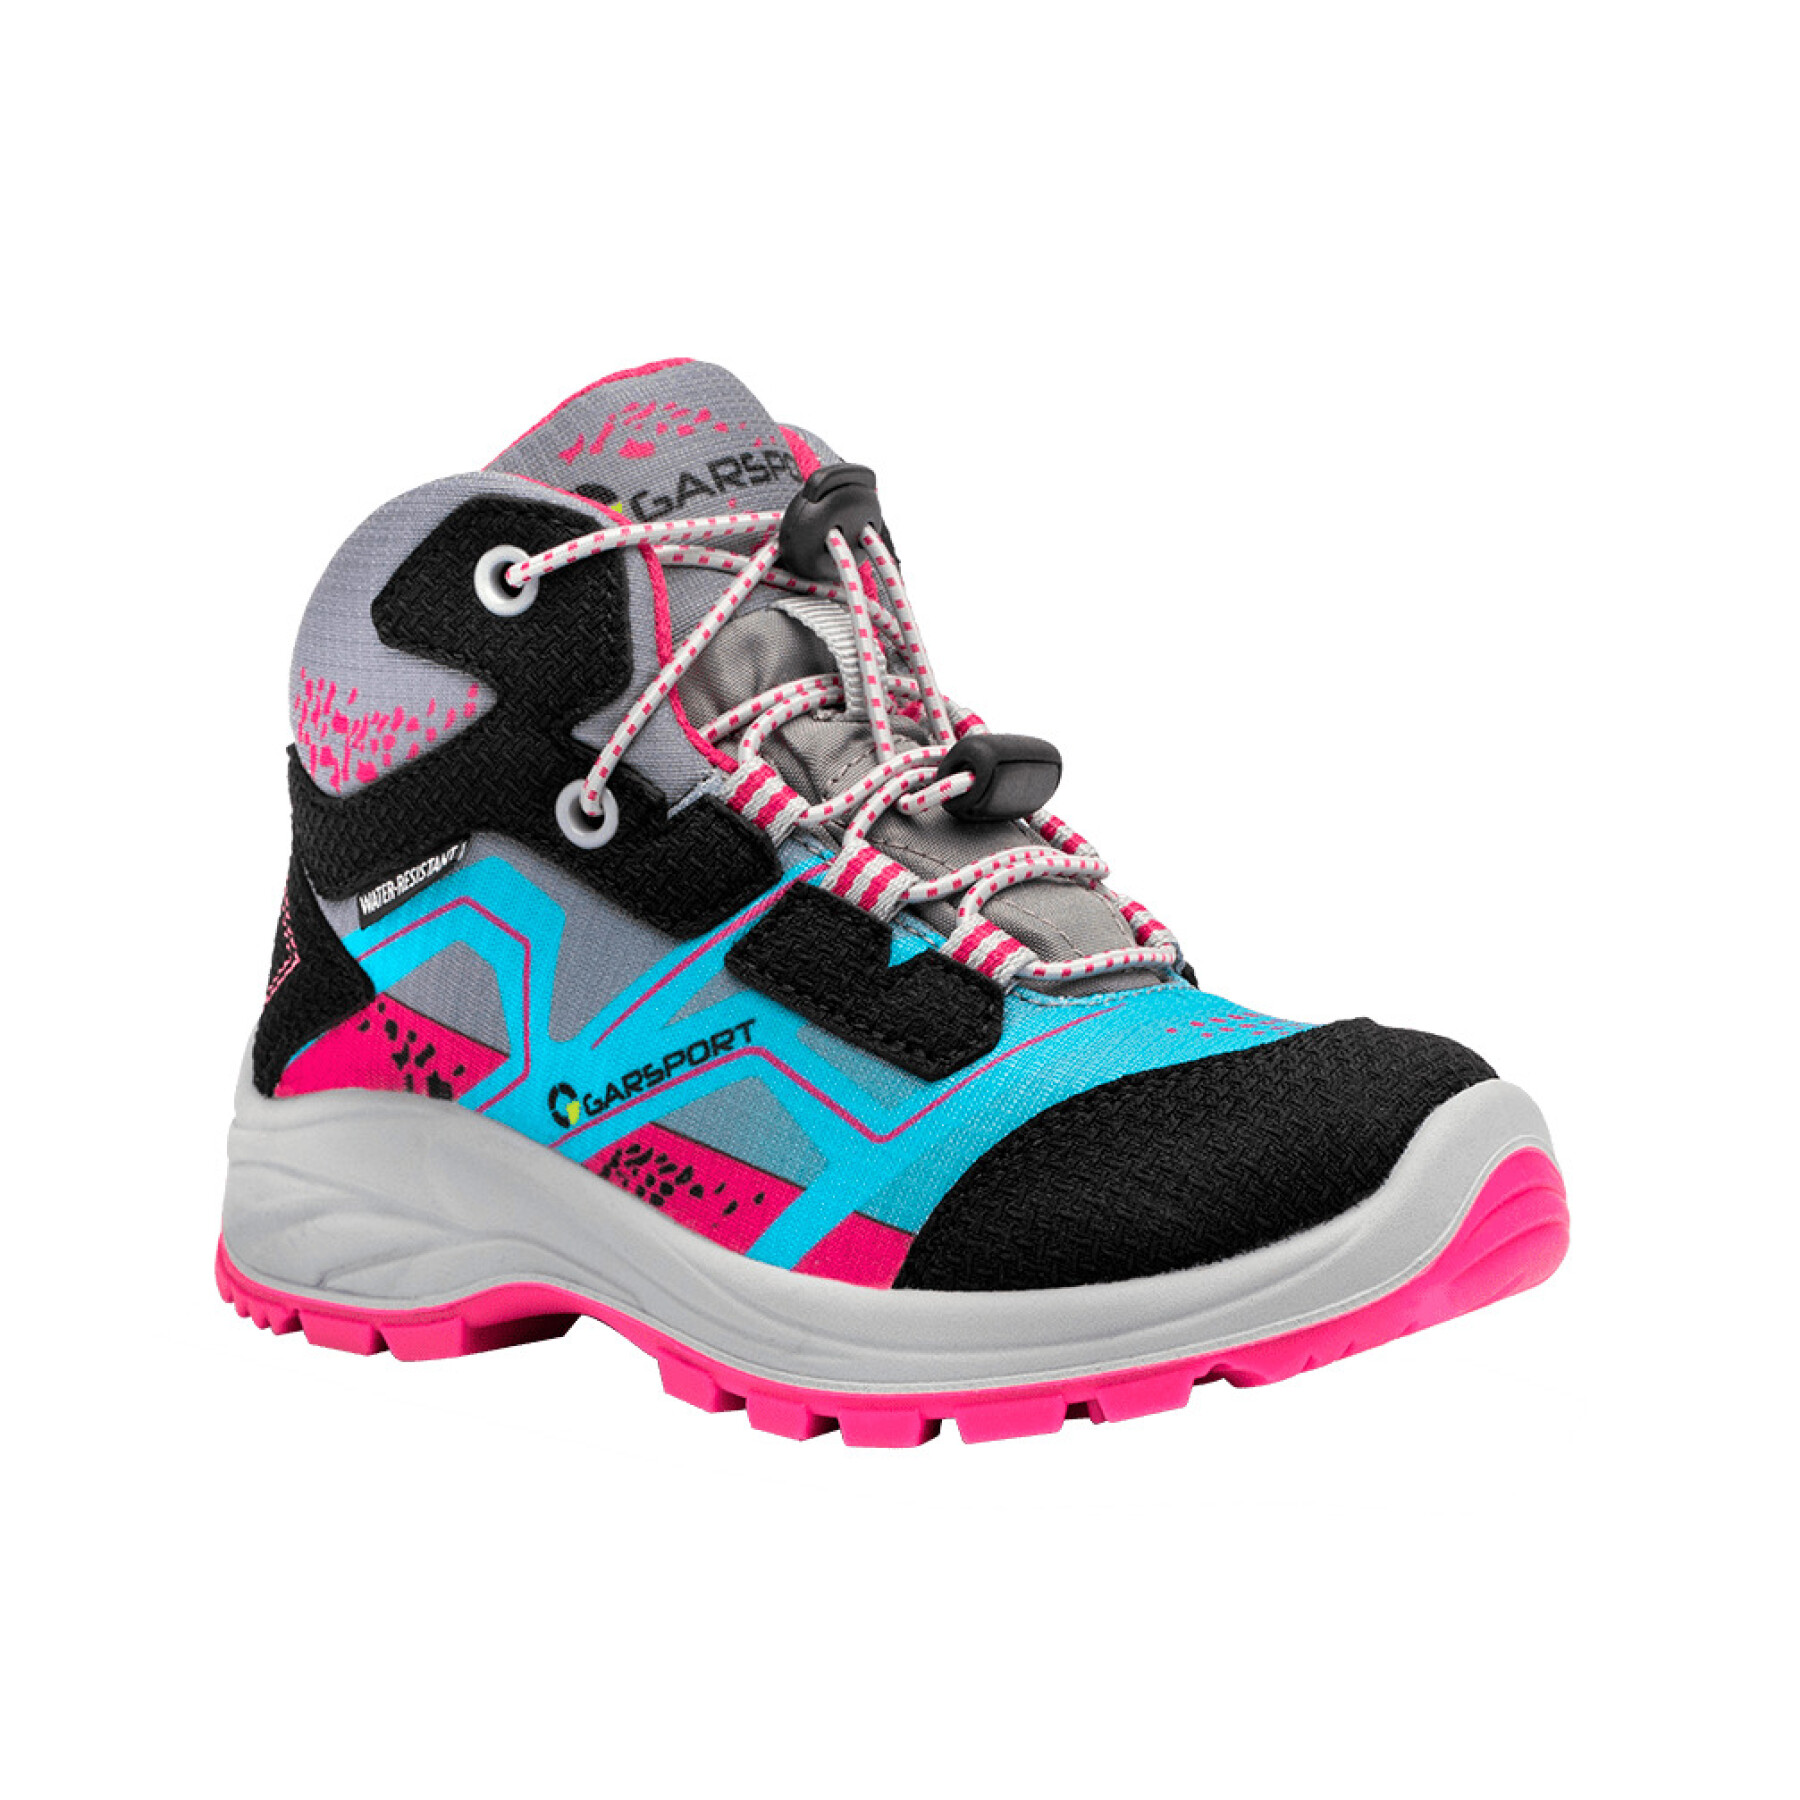 Children's hiking shoes Garsport Iena Mid WR